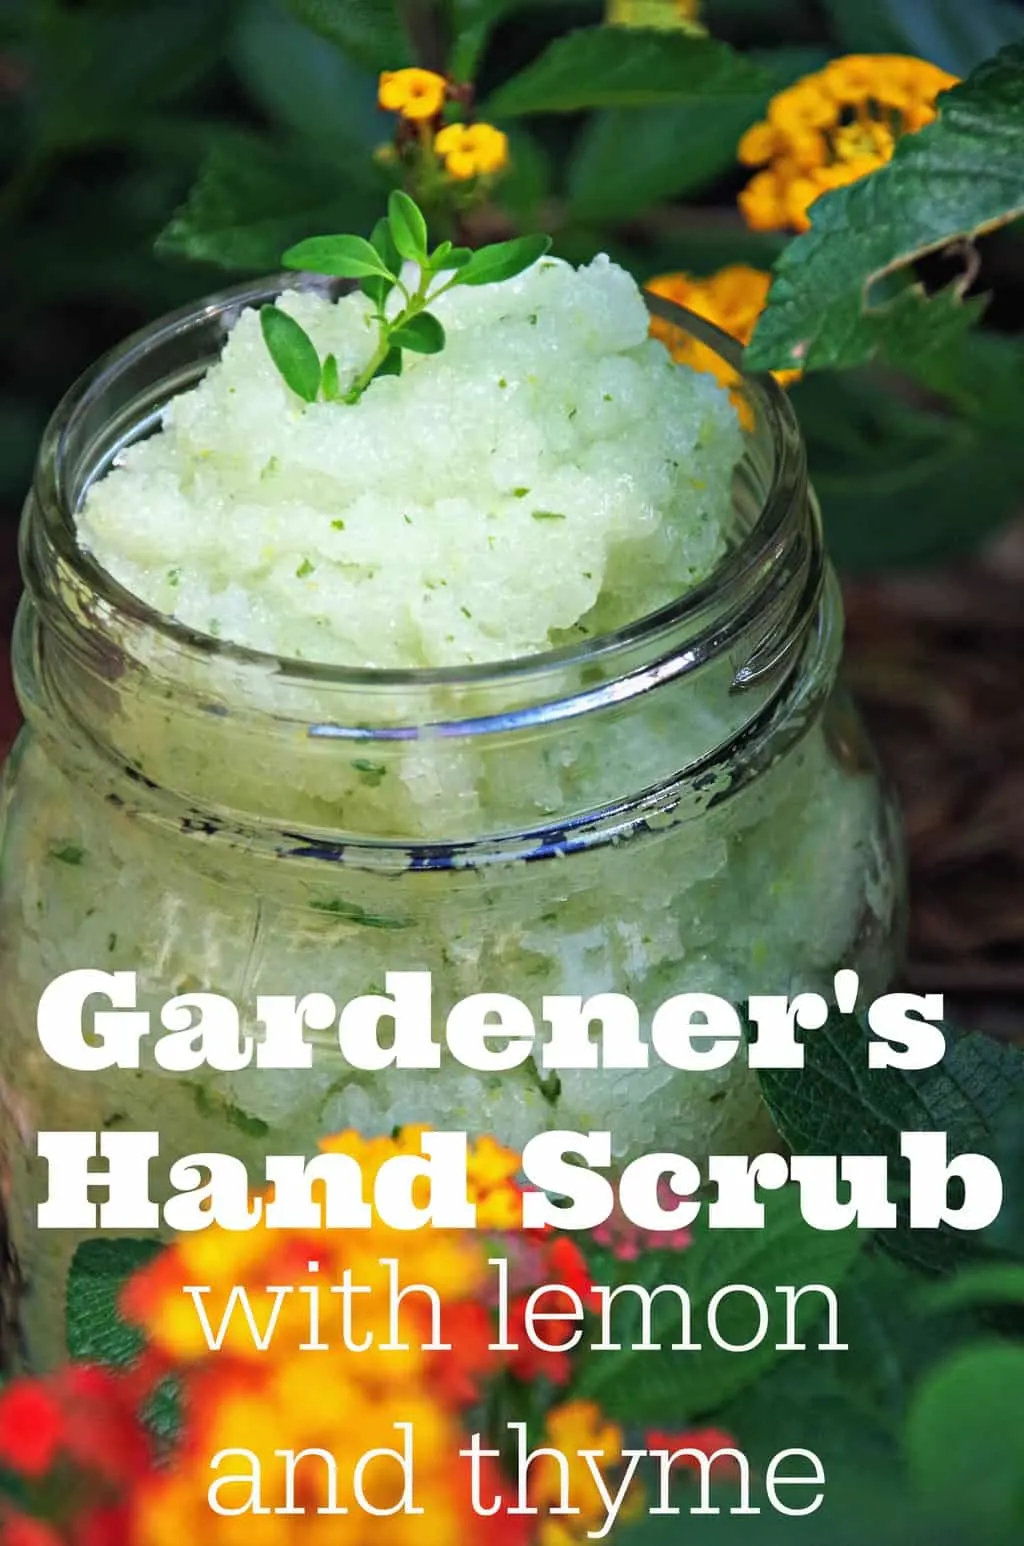 Gardener's hand scrub with lemon and thyme.